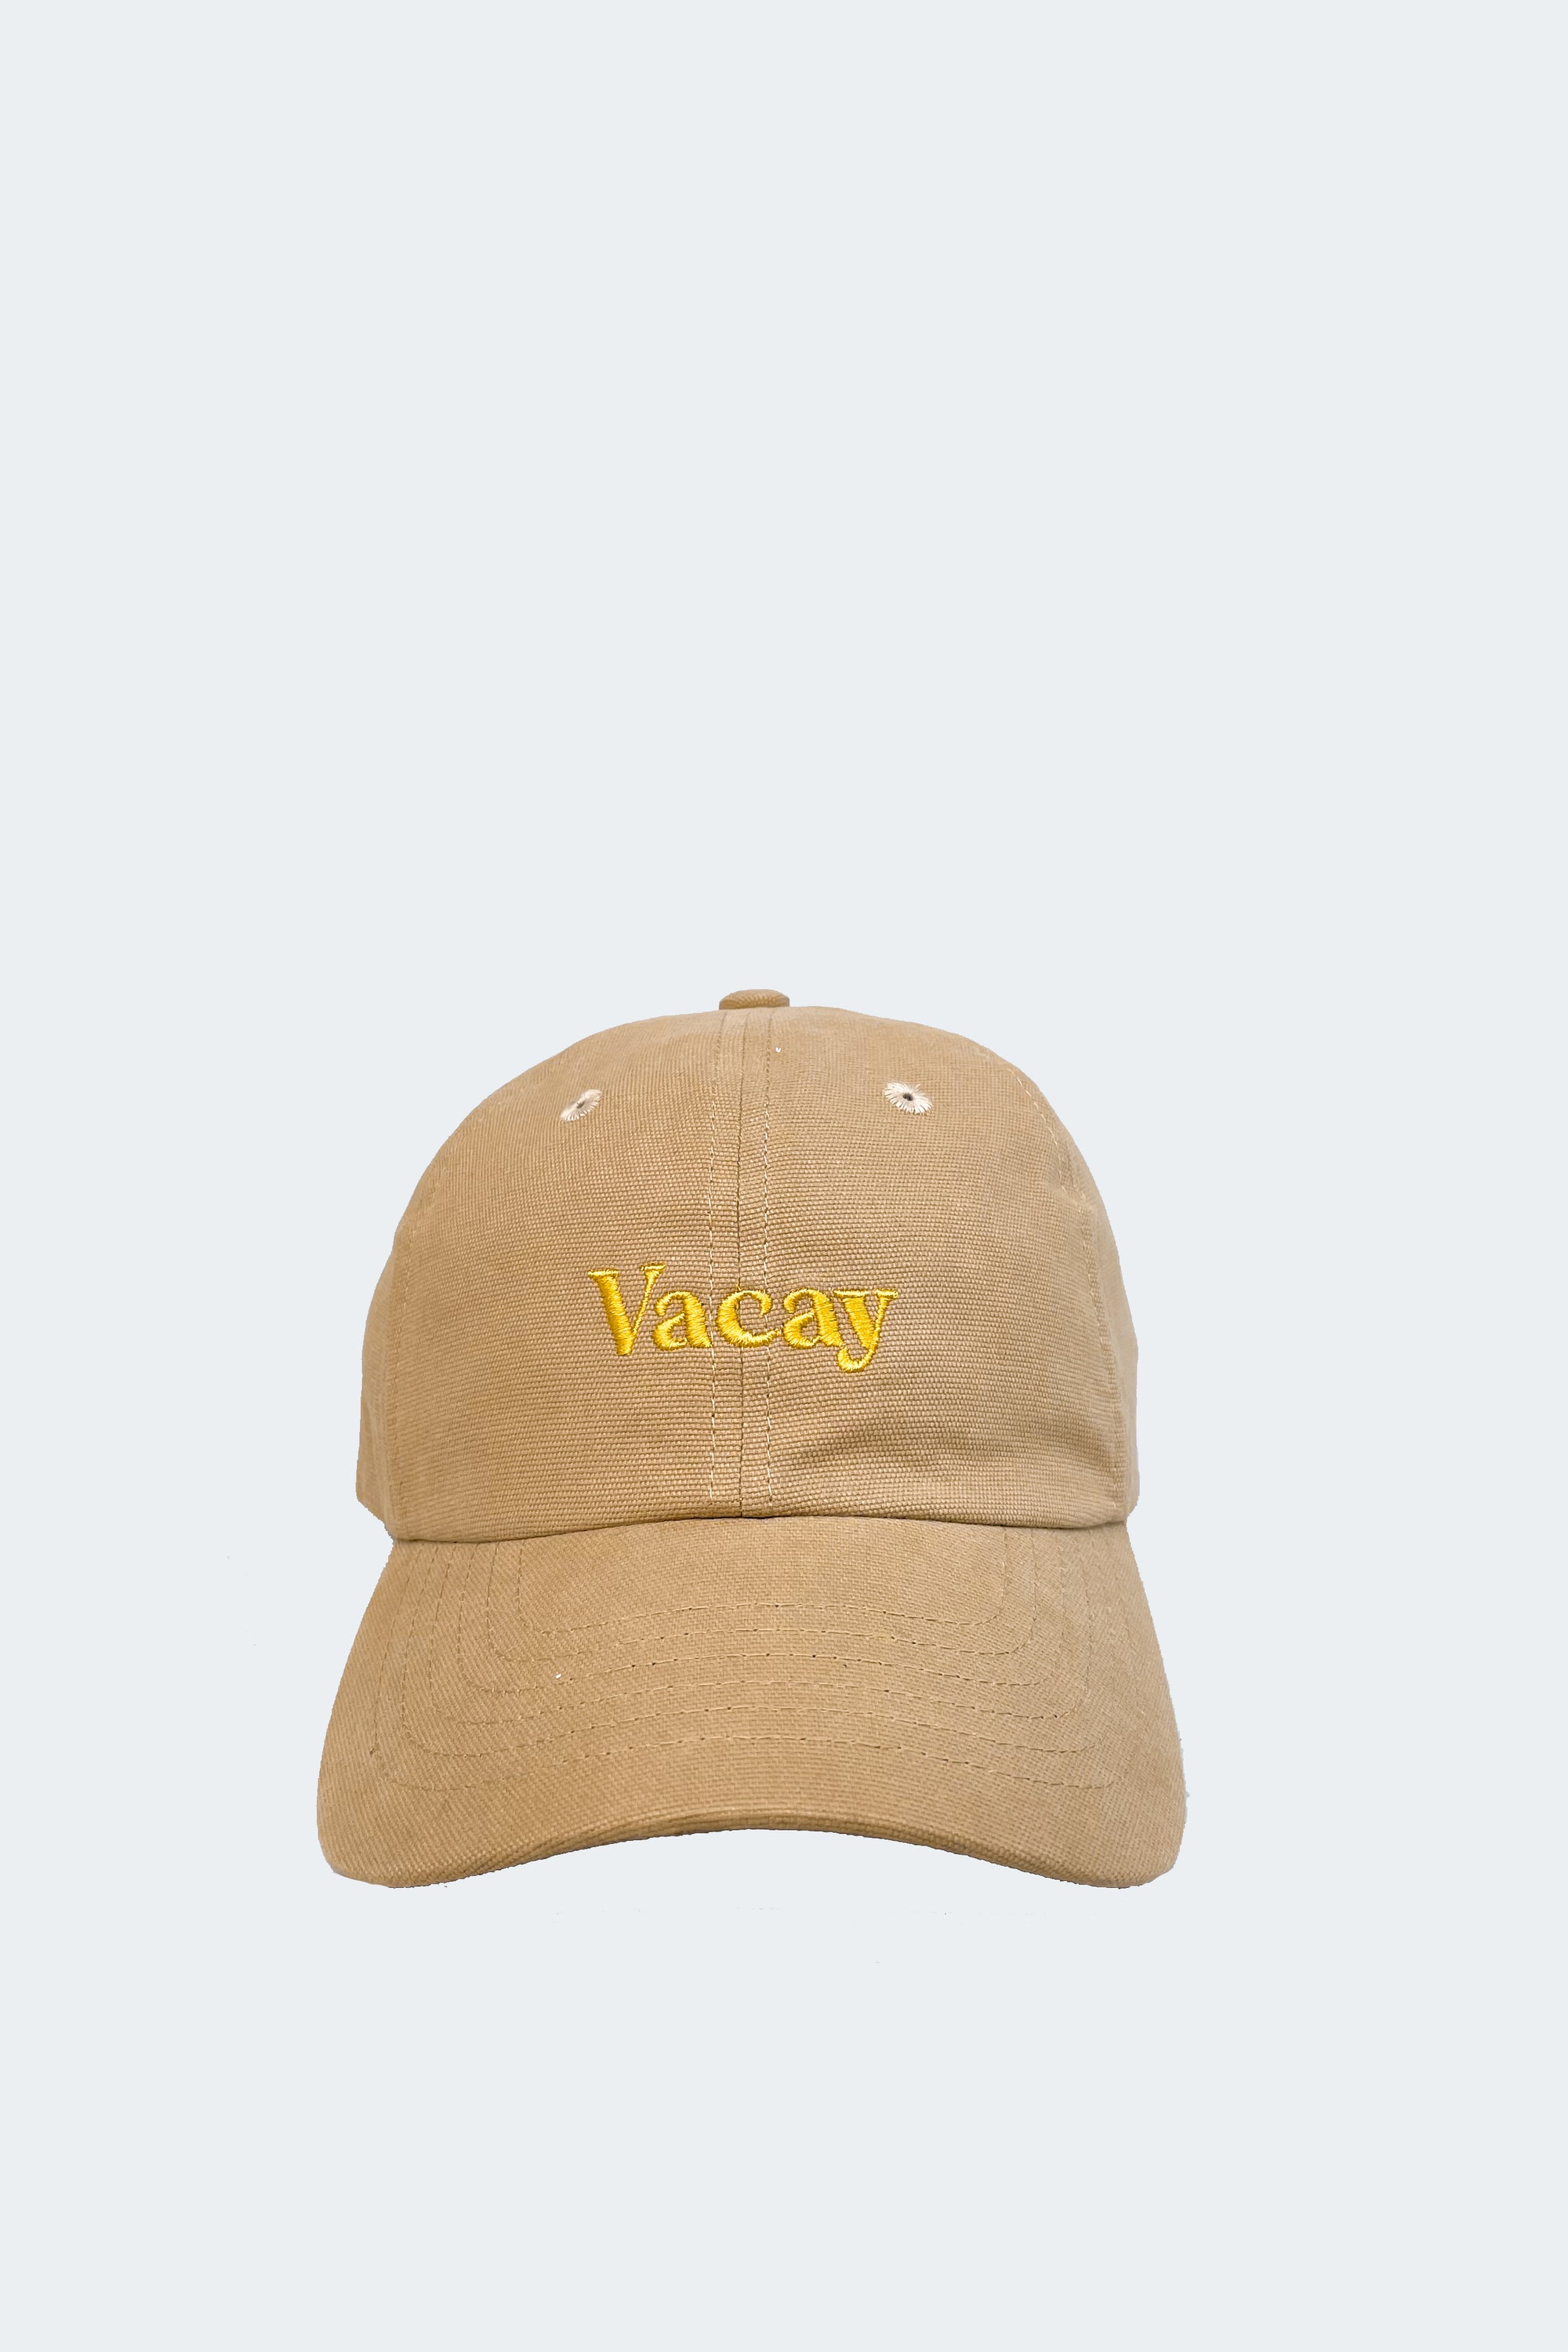 Vacay Caps